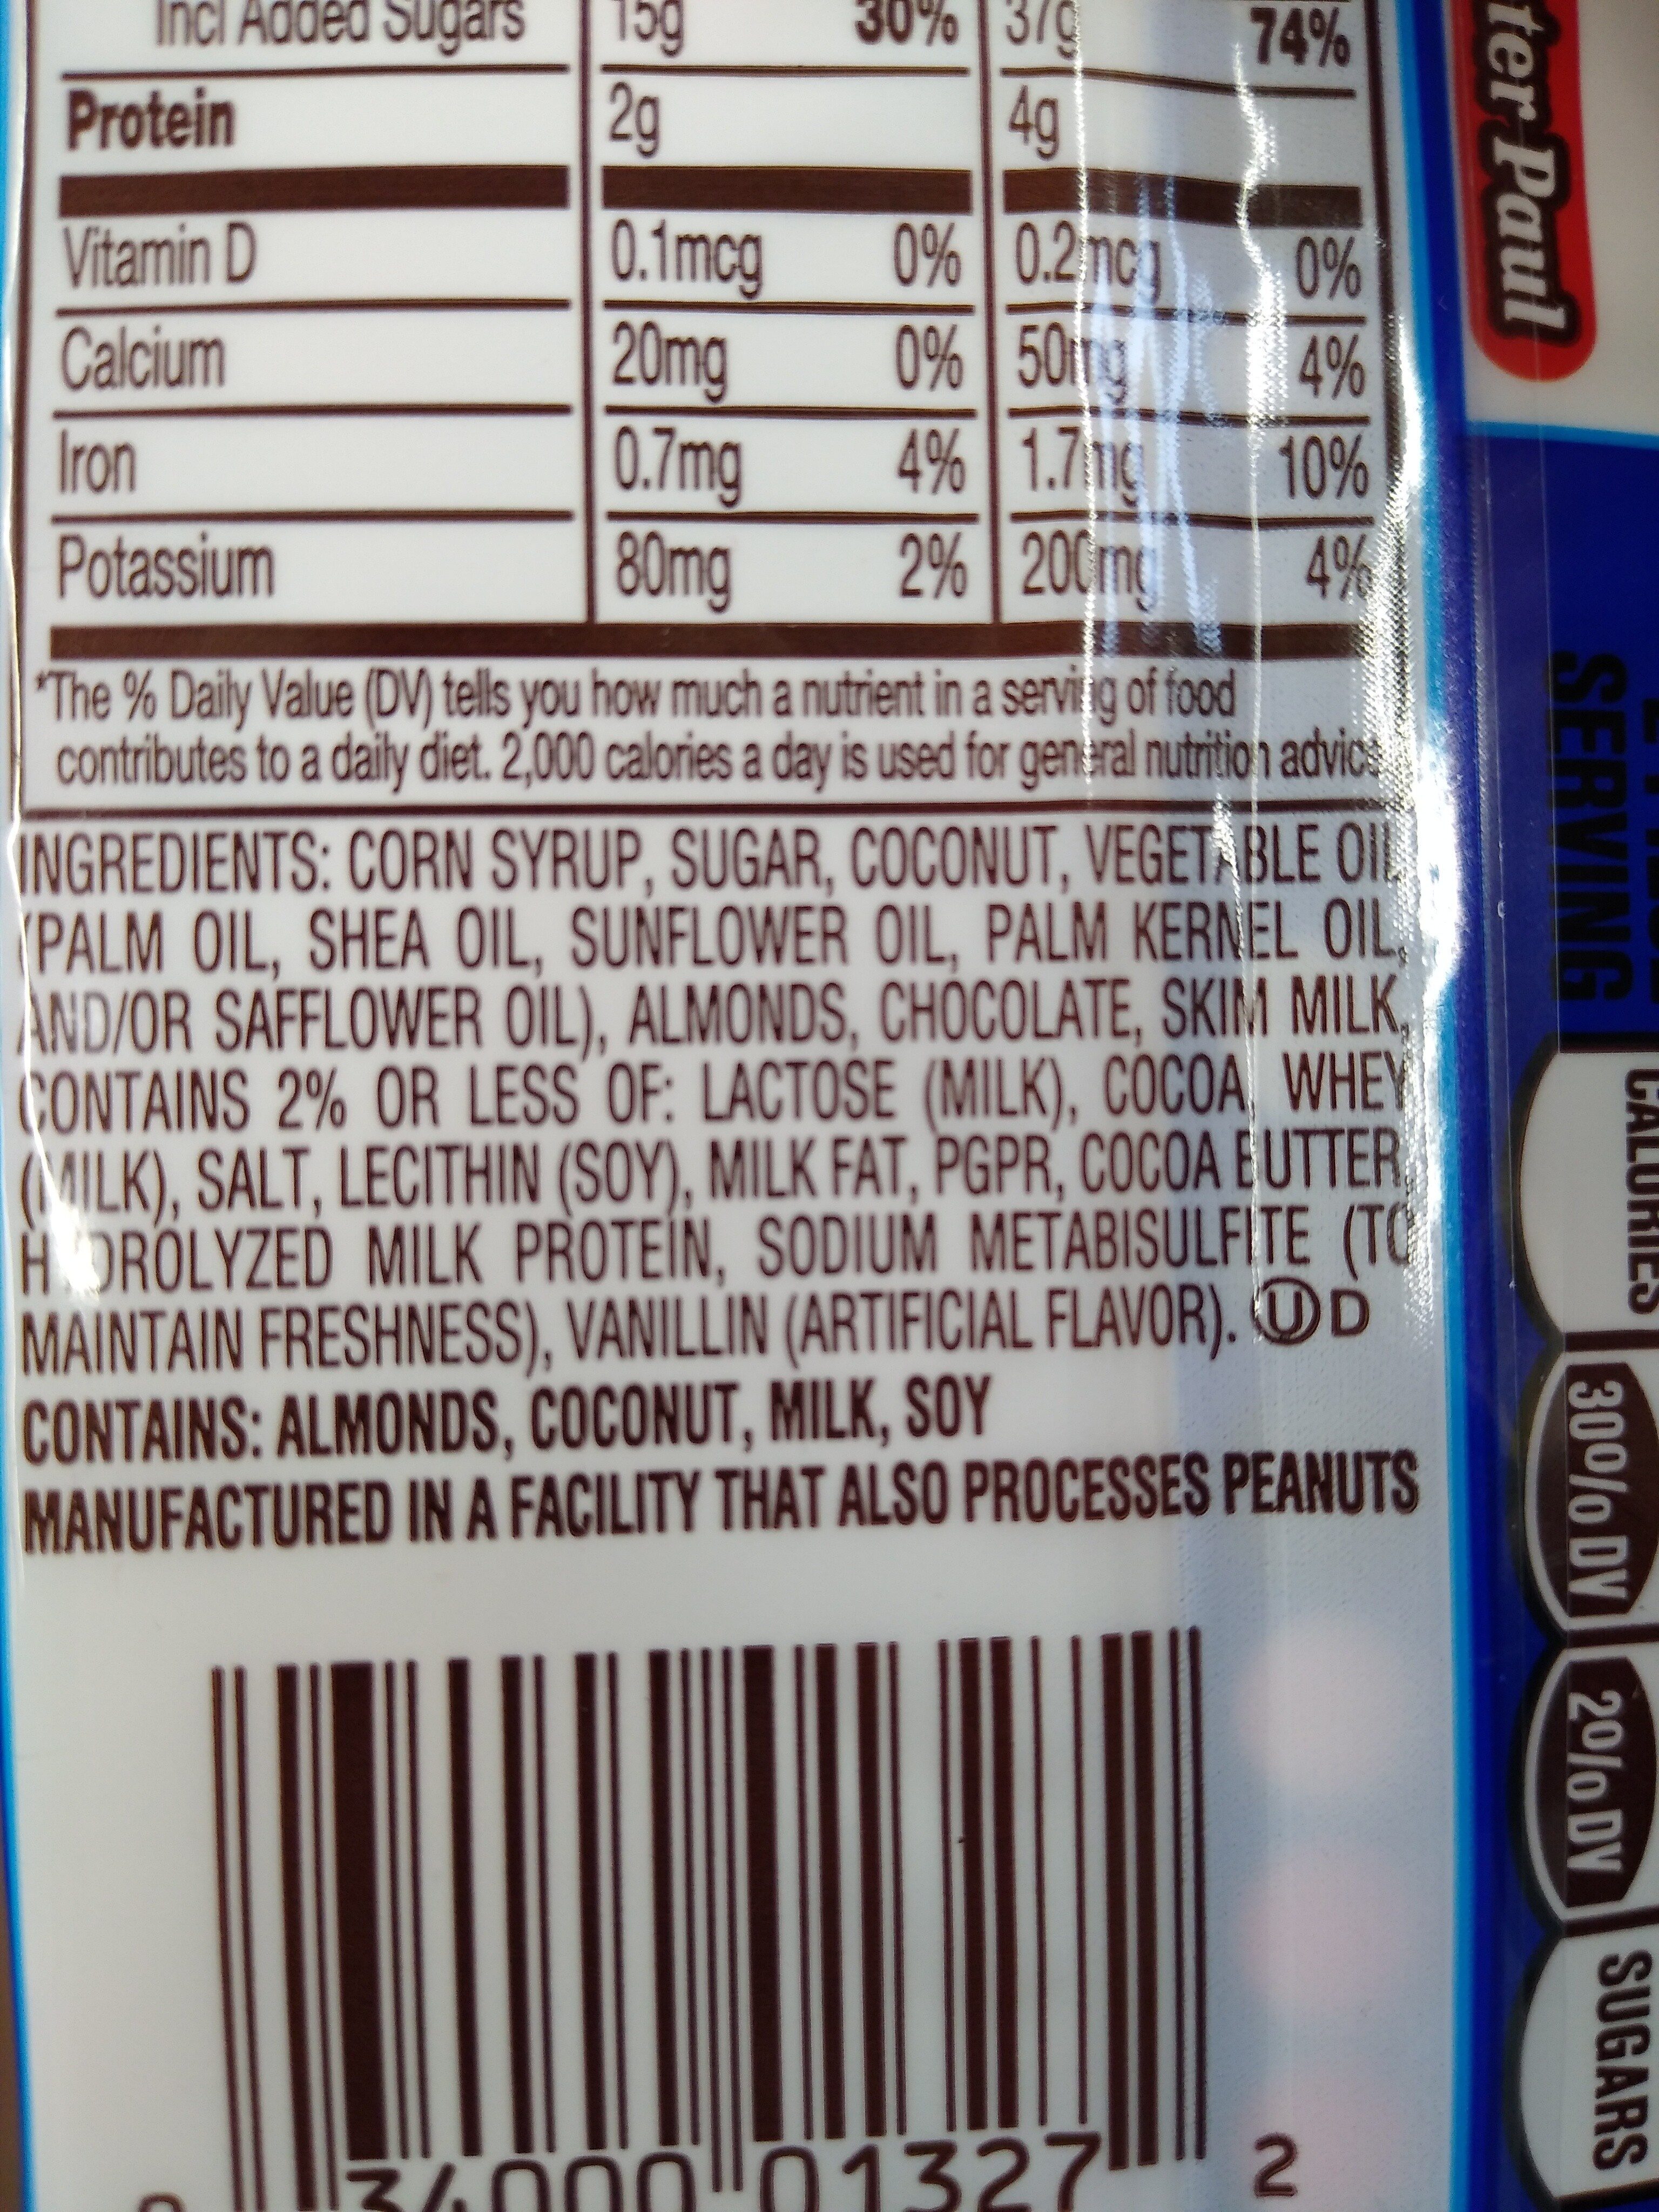 Almond joy mini snack bars - Ingredients